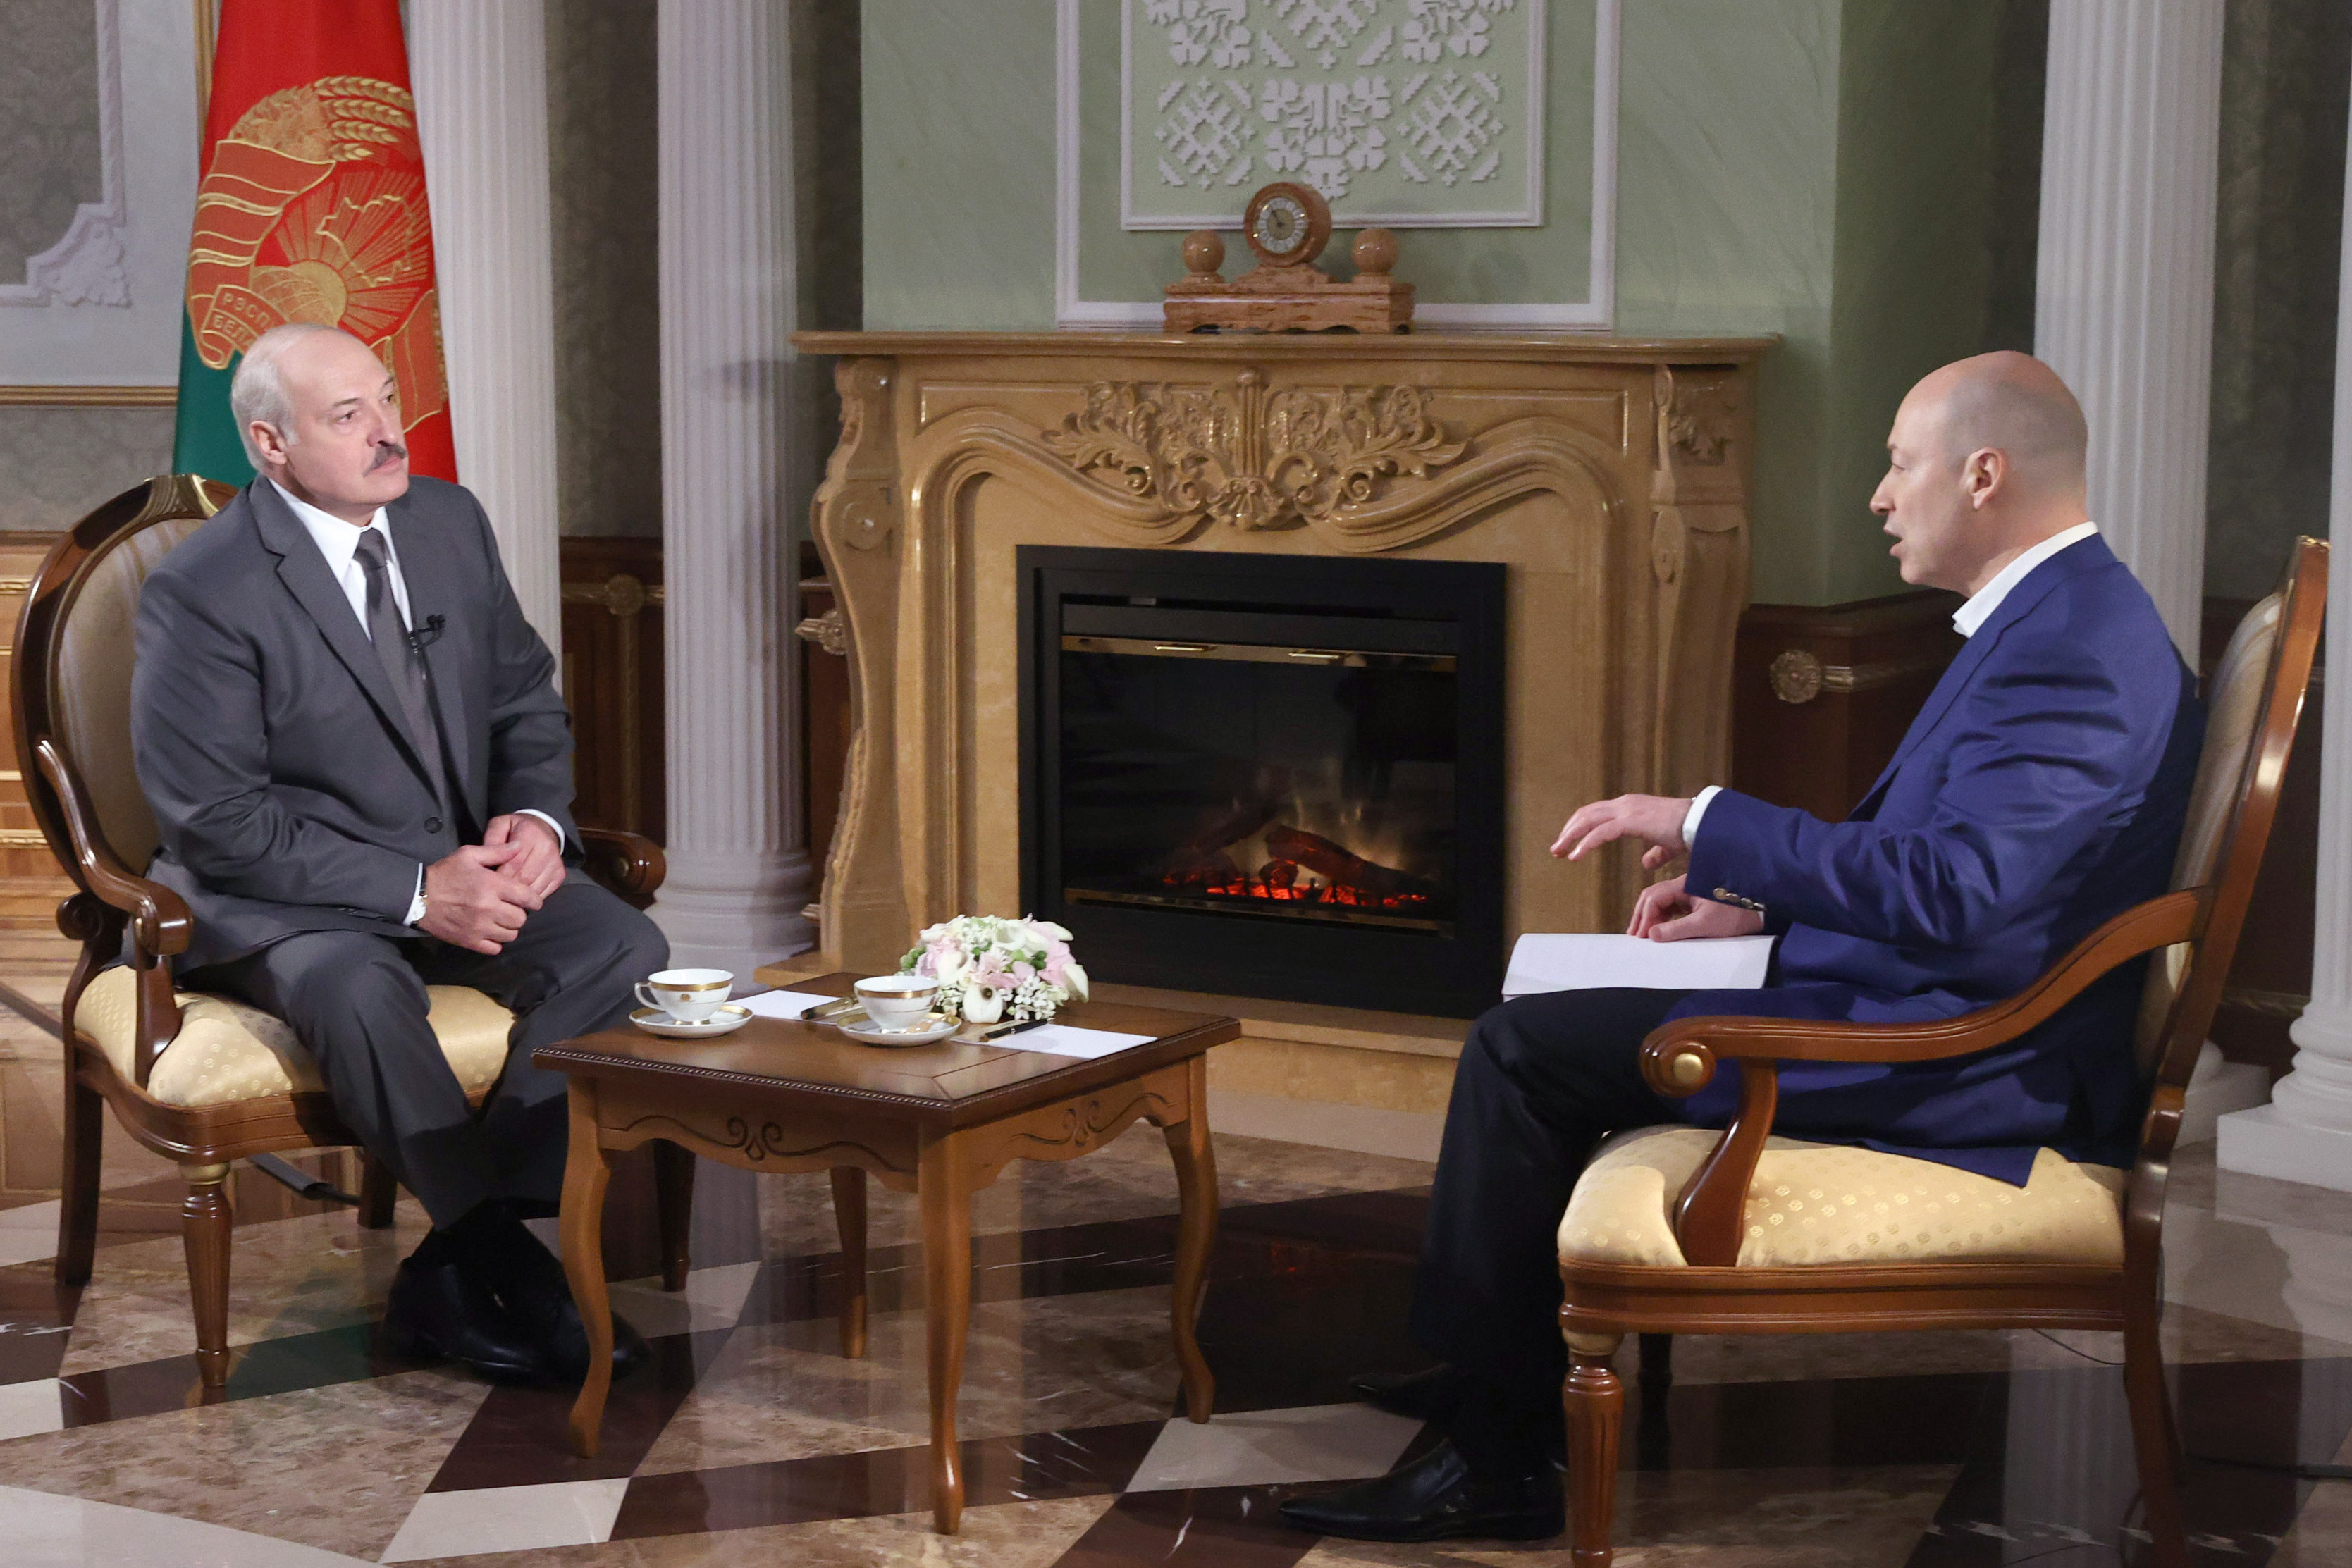 АТН обнародовало полное интервью Александра Лукашенко журналисту канала CNN